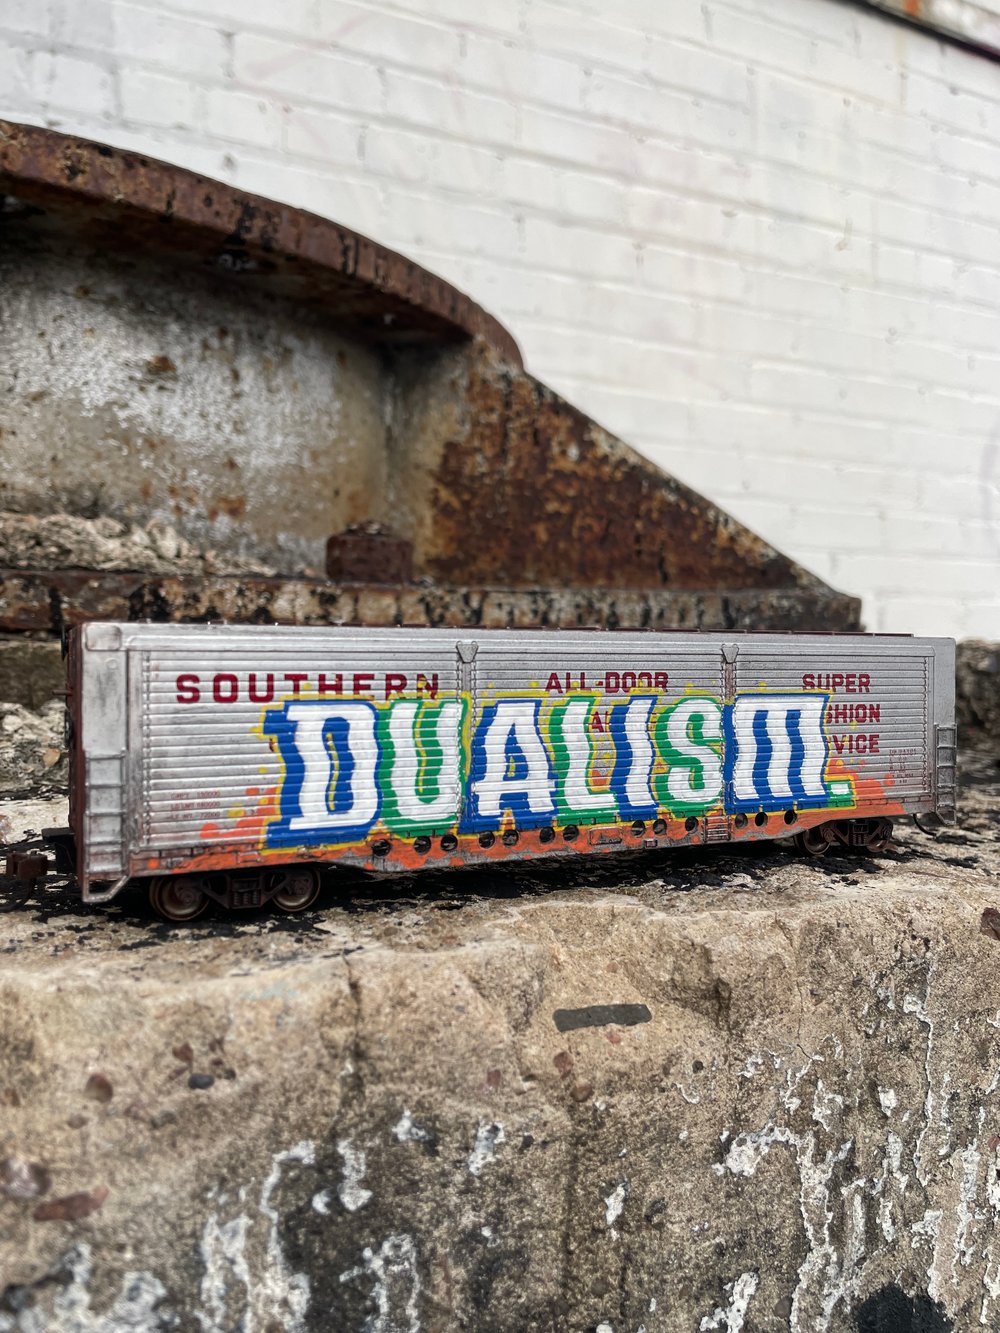 DUALISM - Southern Railroad Super Cushion Service Box Car